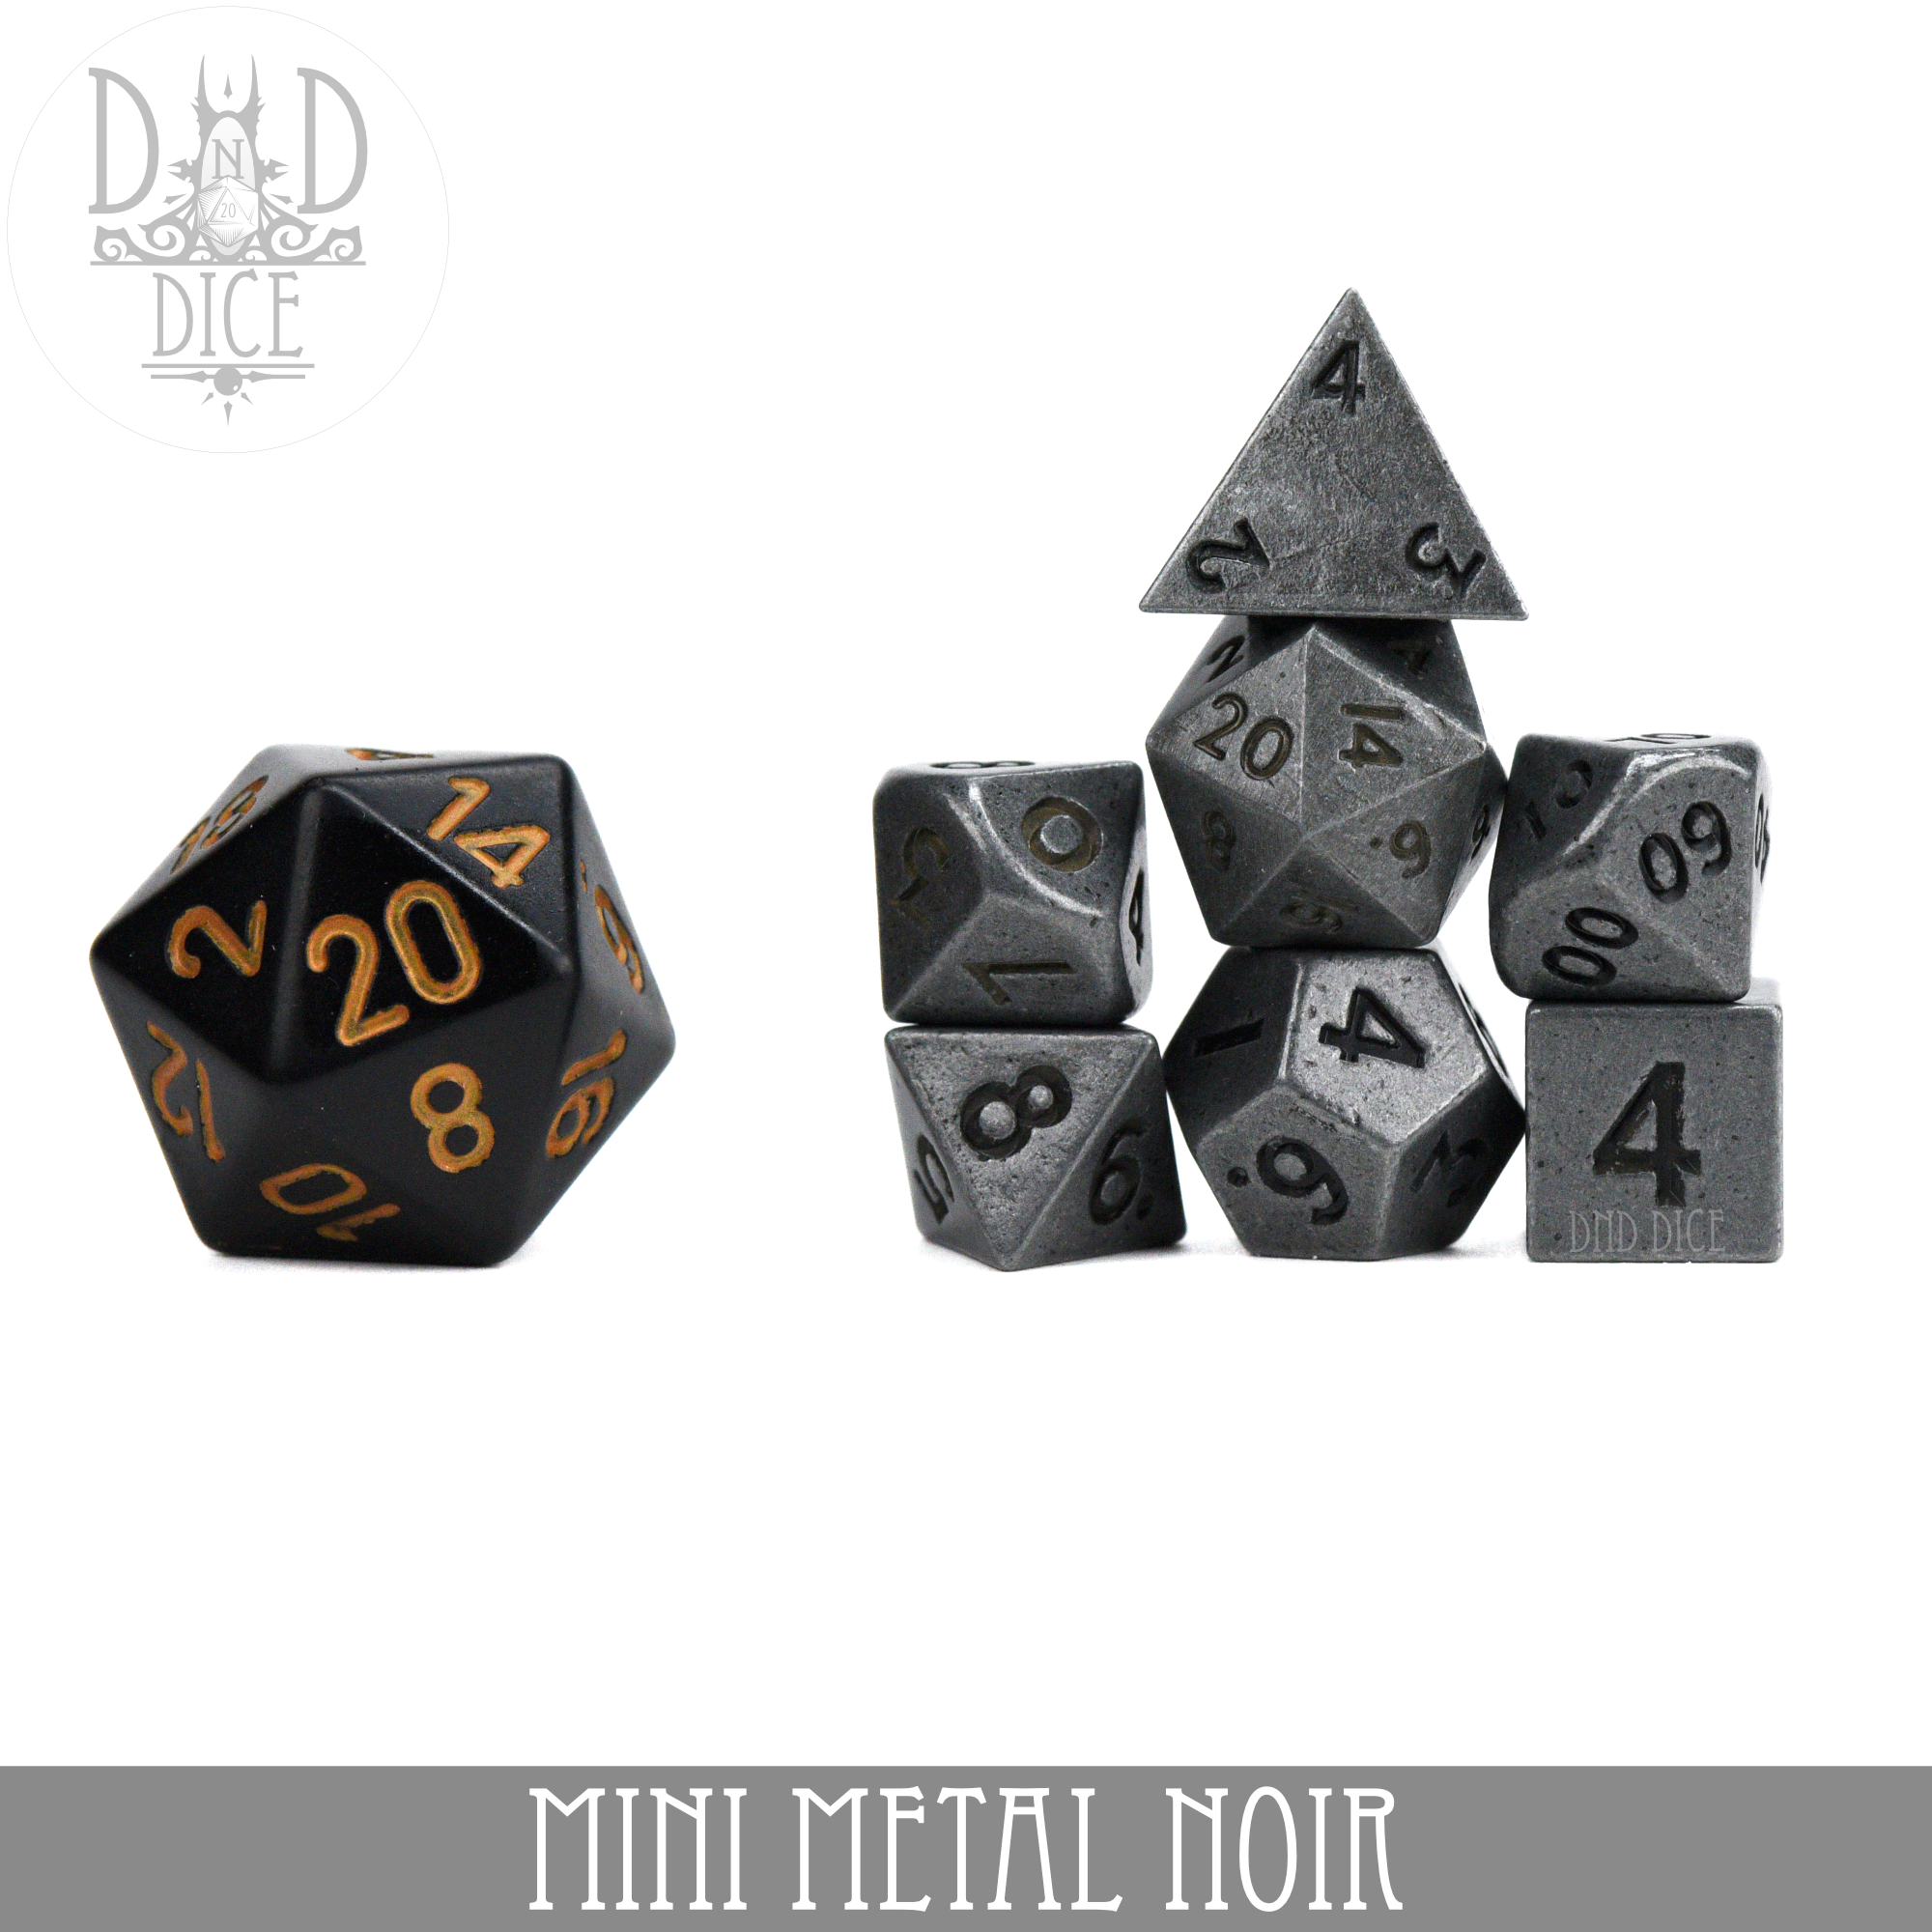 Mini Metal Noir Dice Set (10mm)